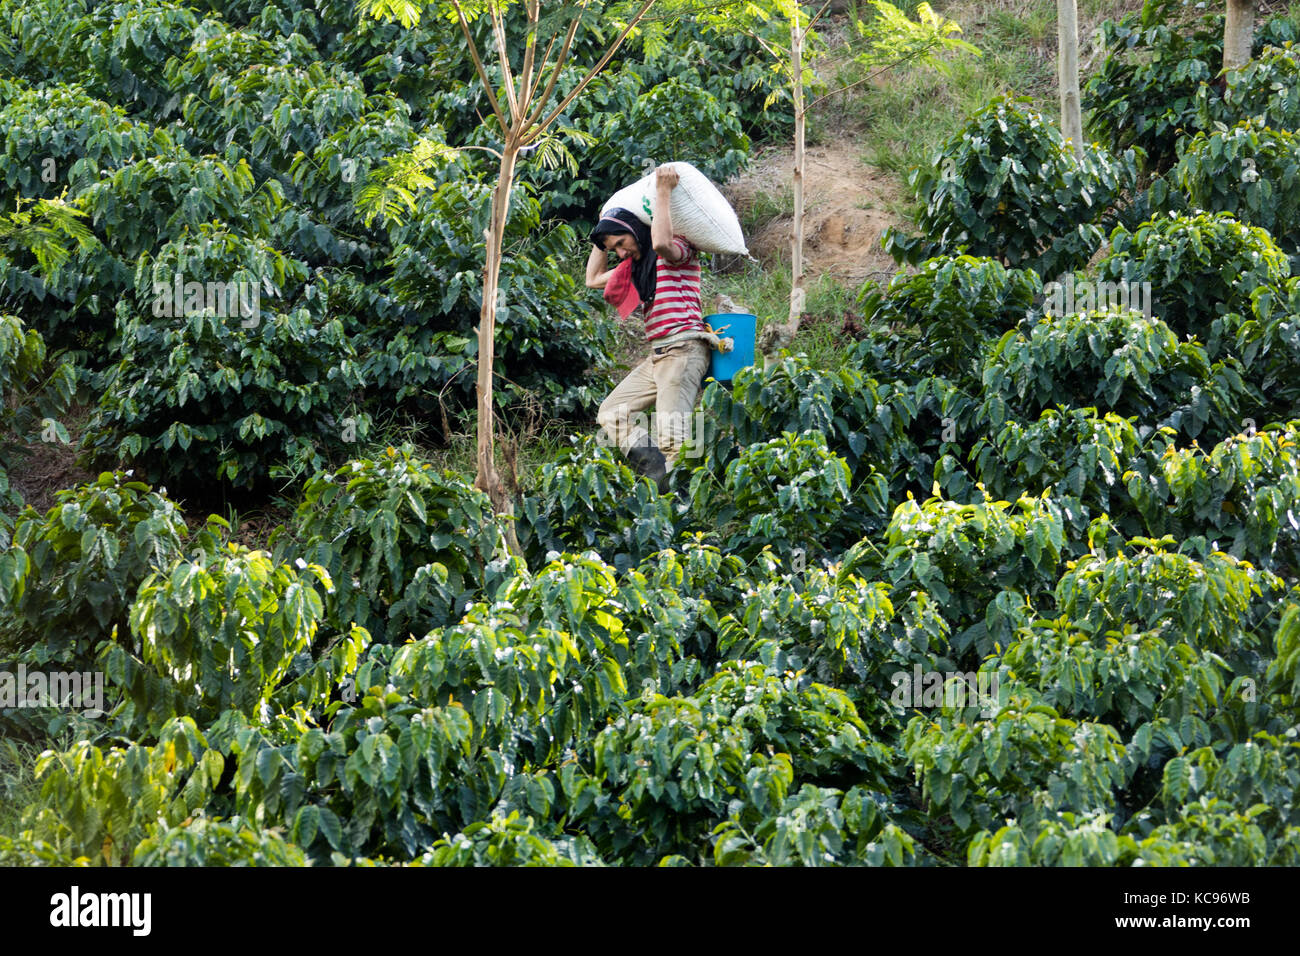 Picker carrying beans from the field, Hacienda Venecia Coffee Farm, Manizales, Colombia Stock Photo